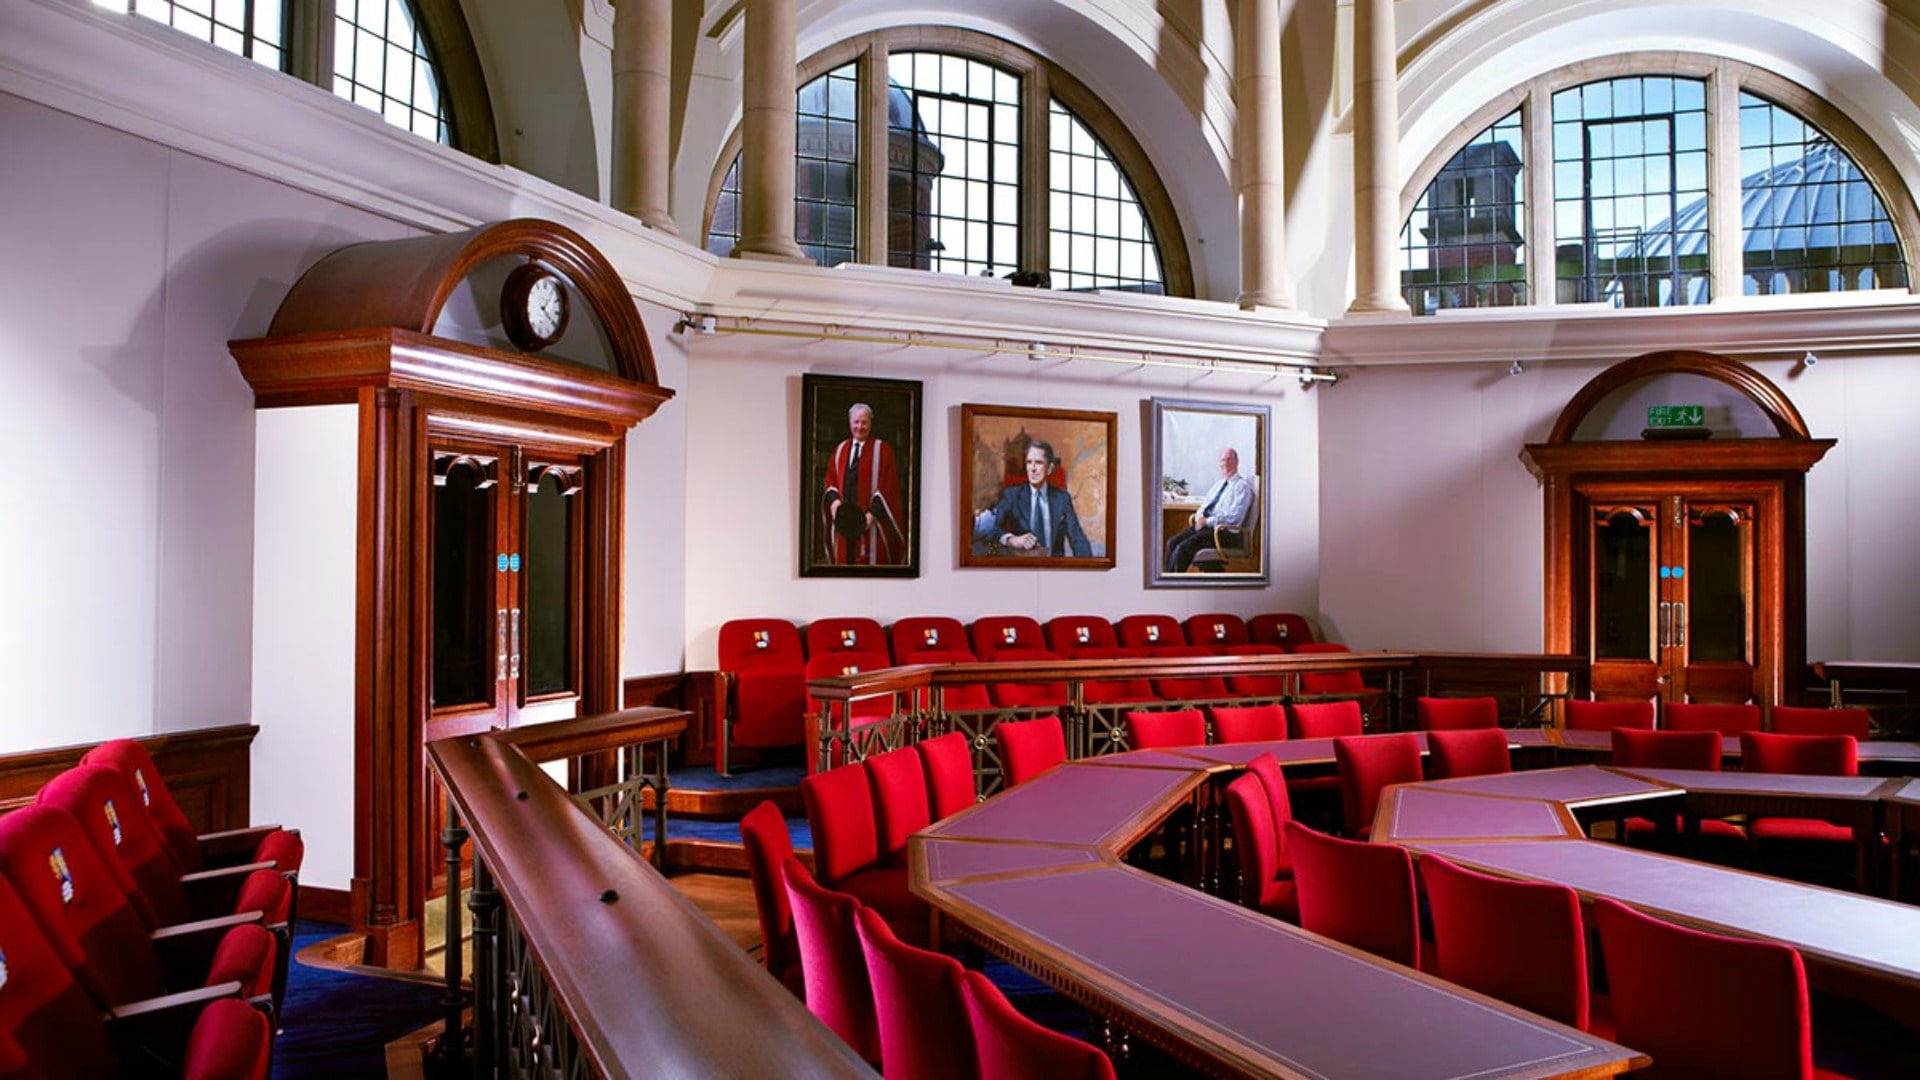 The Senate Chamber at the University of Birmingham.